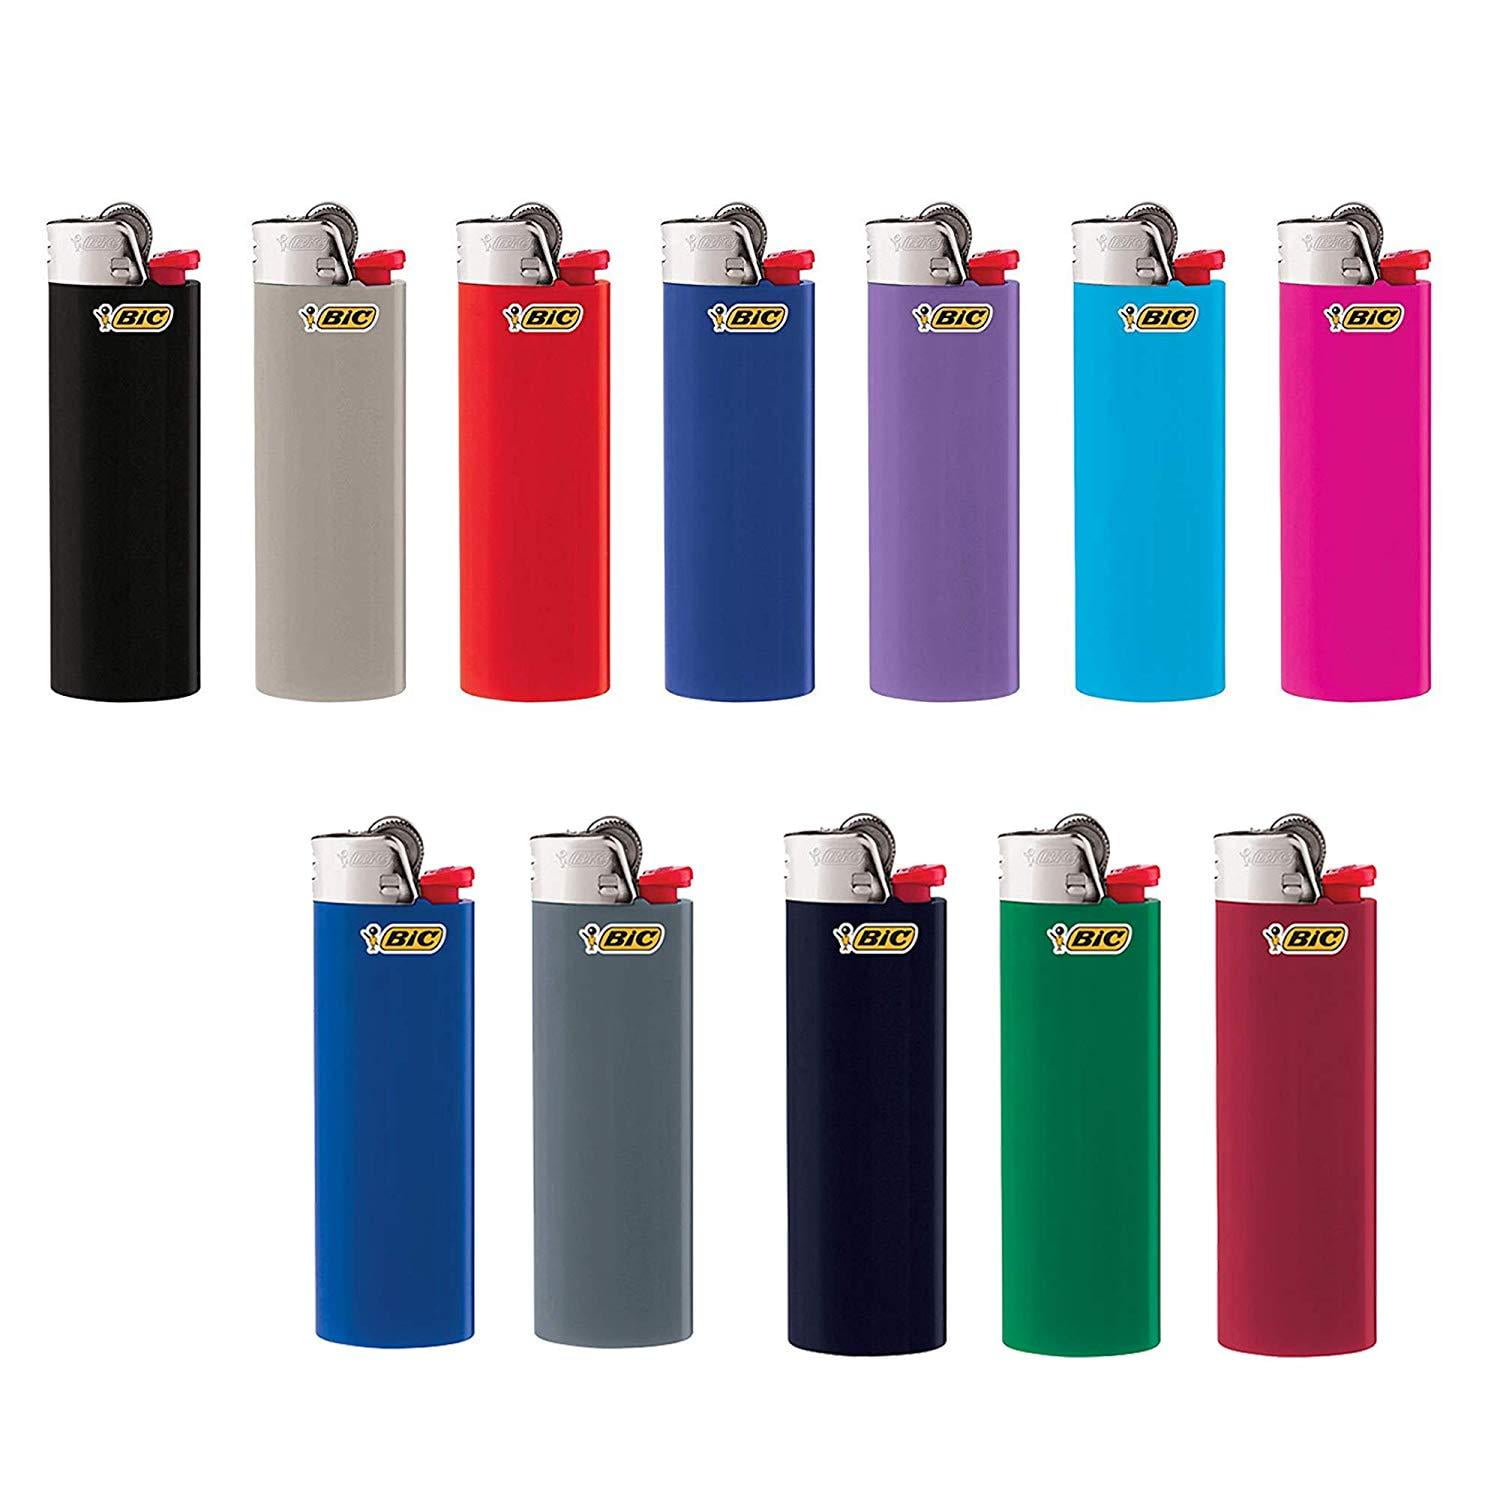 Bic Lighter Classic, Full Size, Assorted Colors,12 Piece - Walmart.com